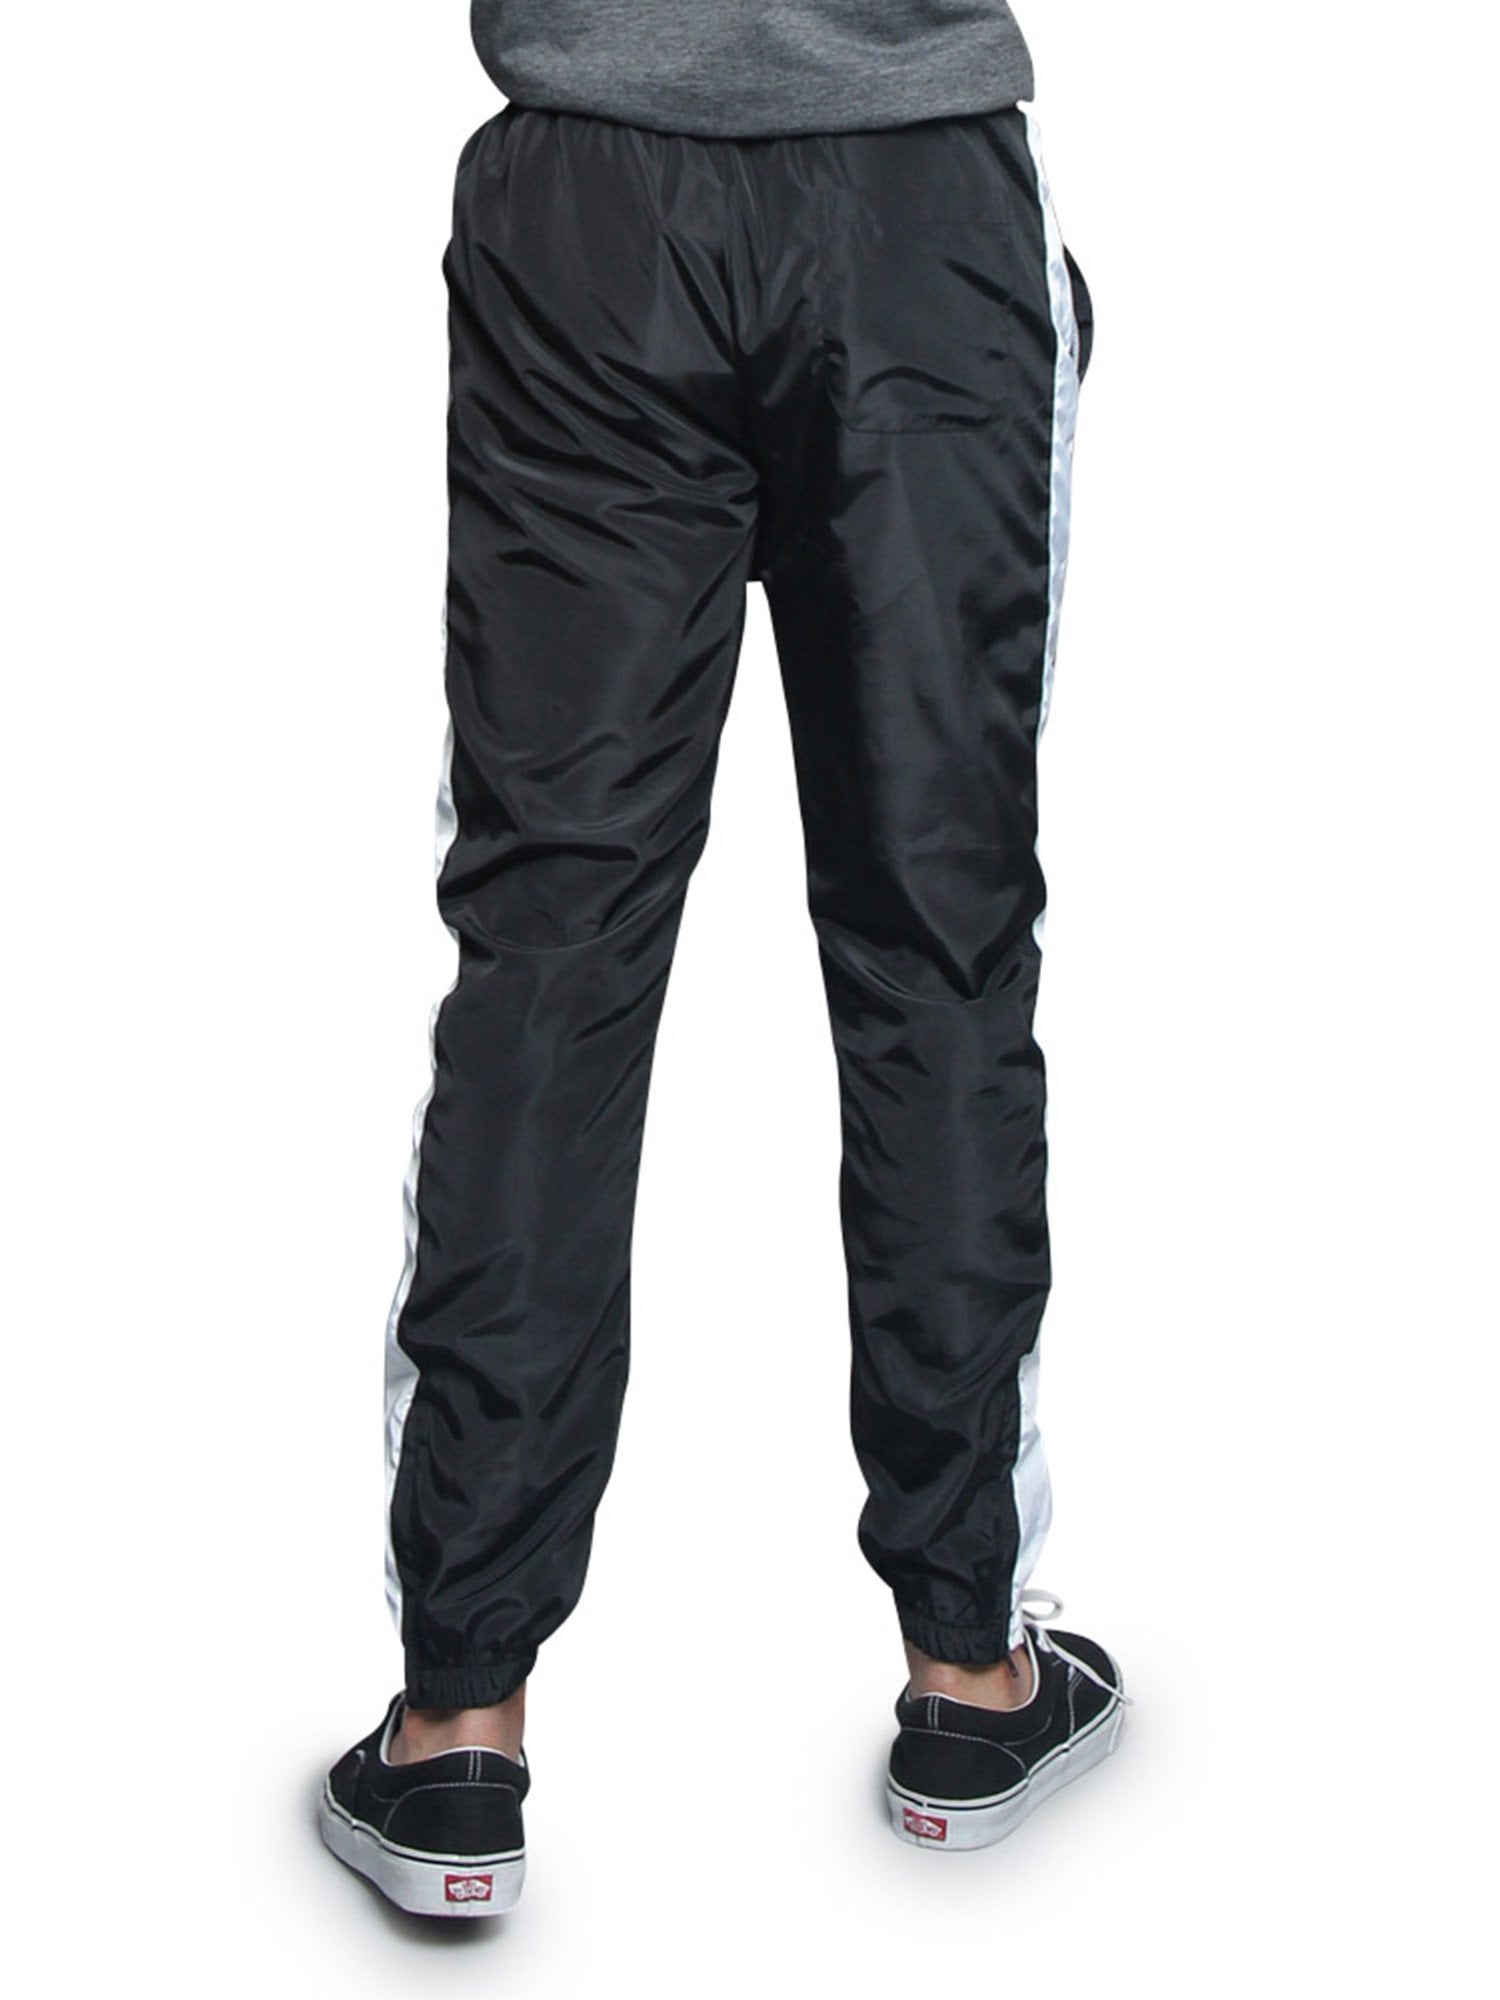 G-Style USA Men's Striped Athletic Jogging Windbreaker Track Pants TR573 -  Black - 3X-Large